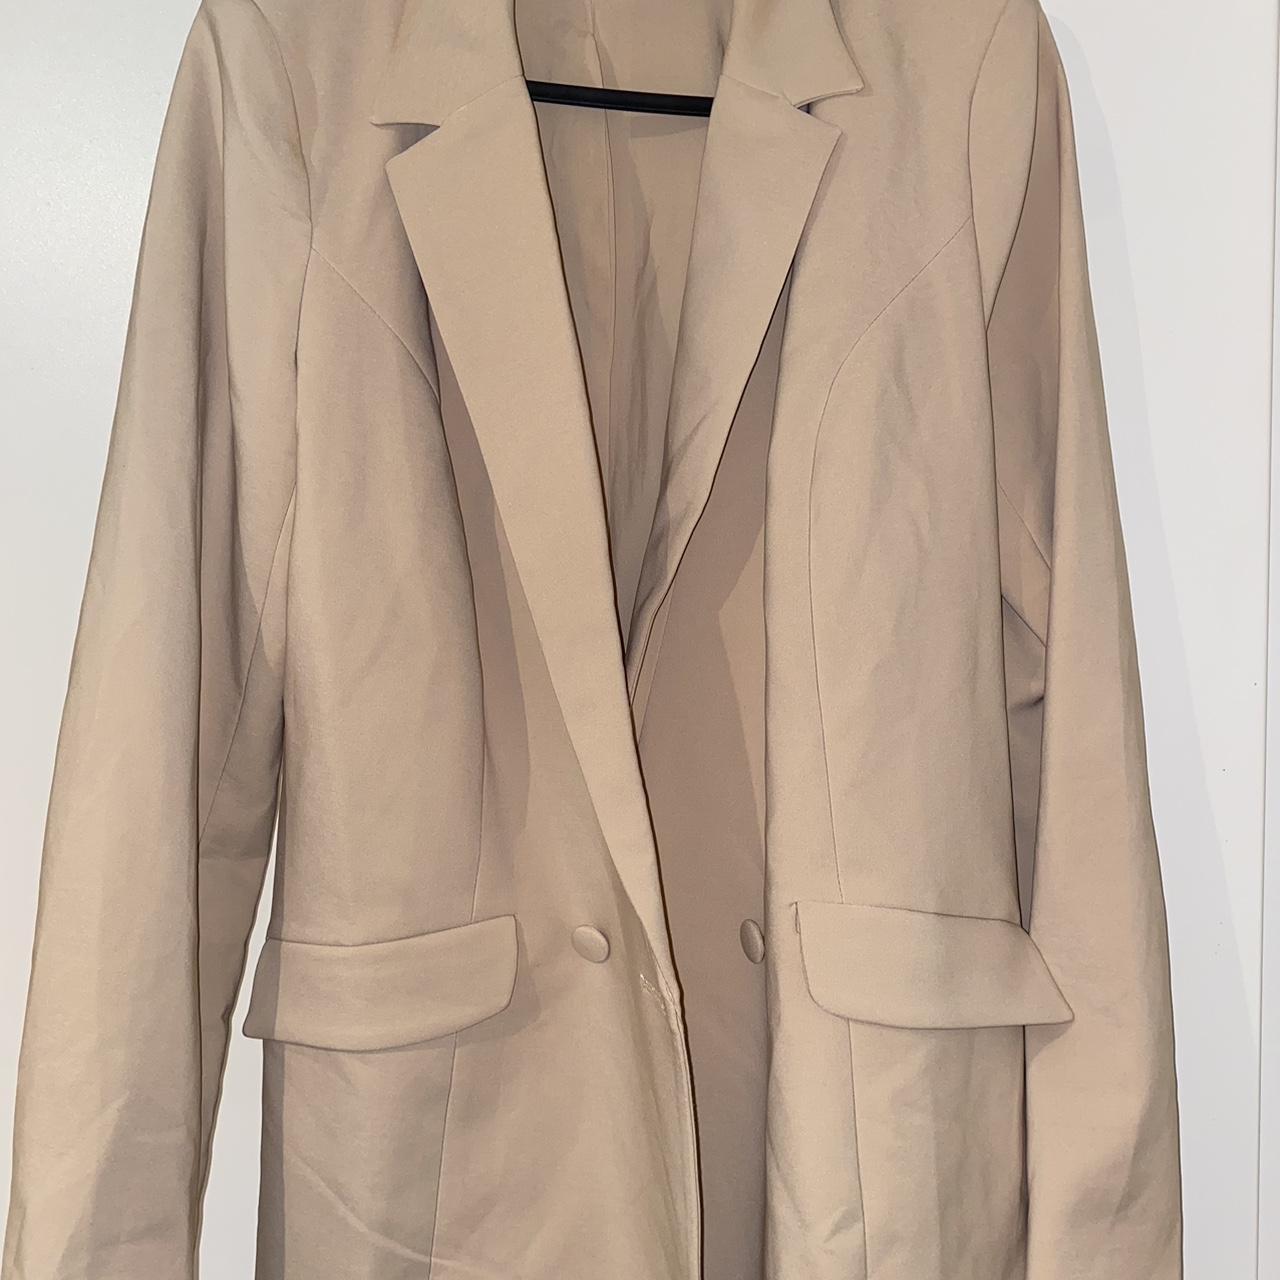 ohPolly beige tailored blazer size 12 excellent... - Depop